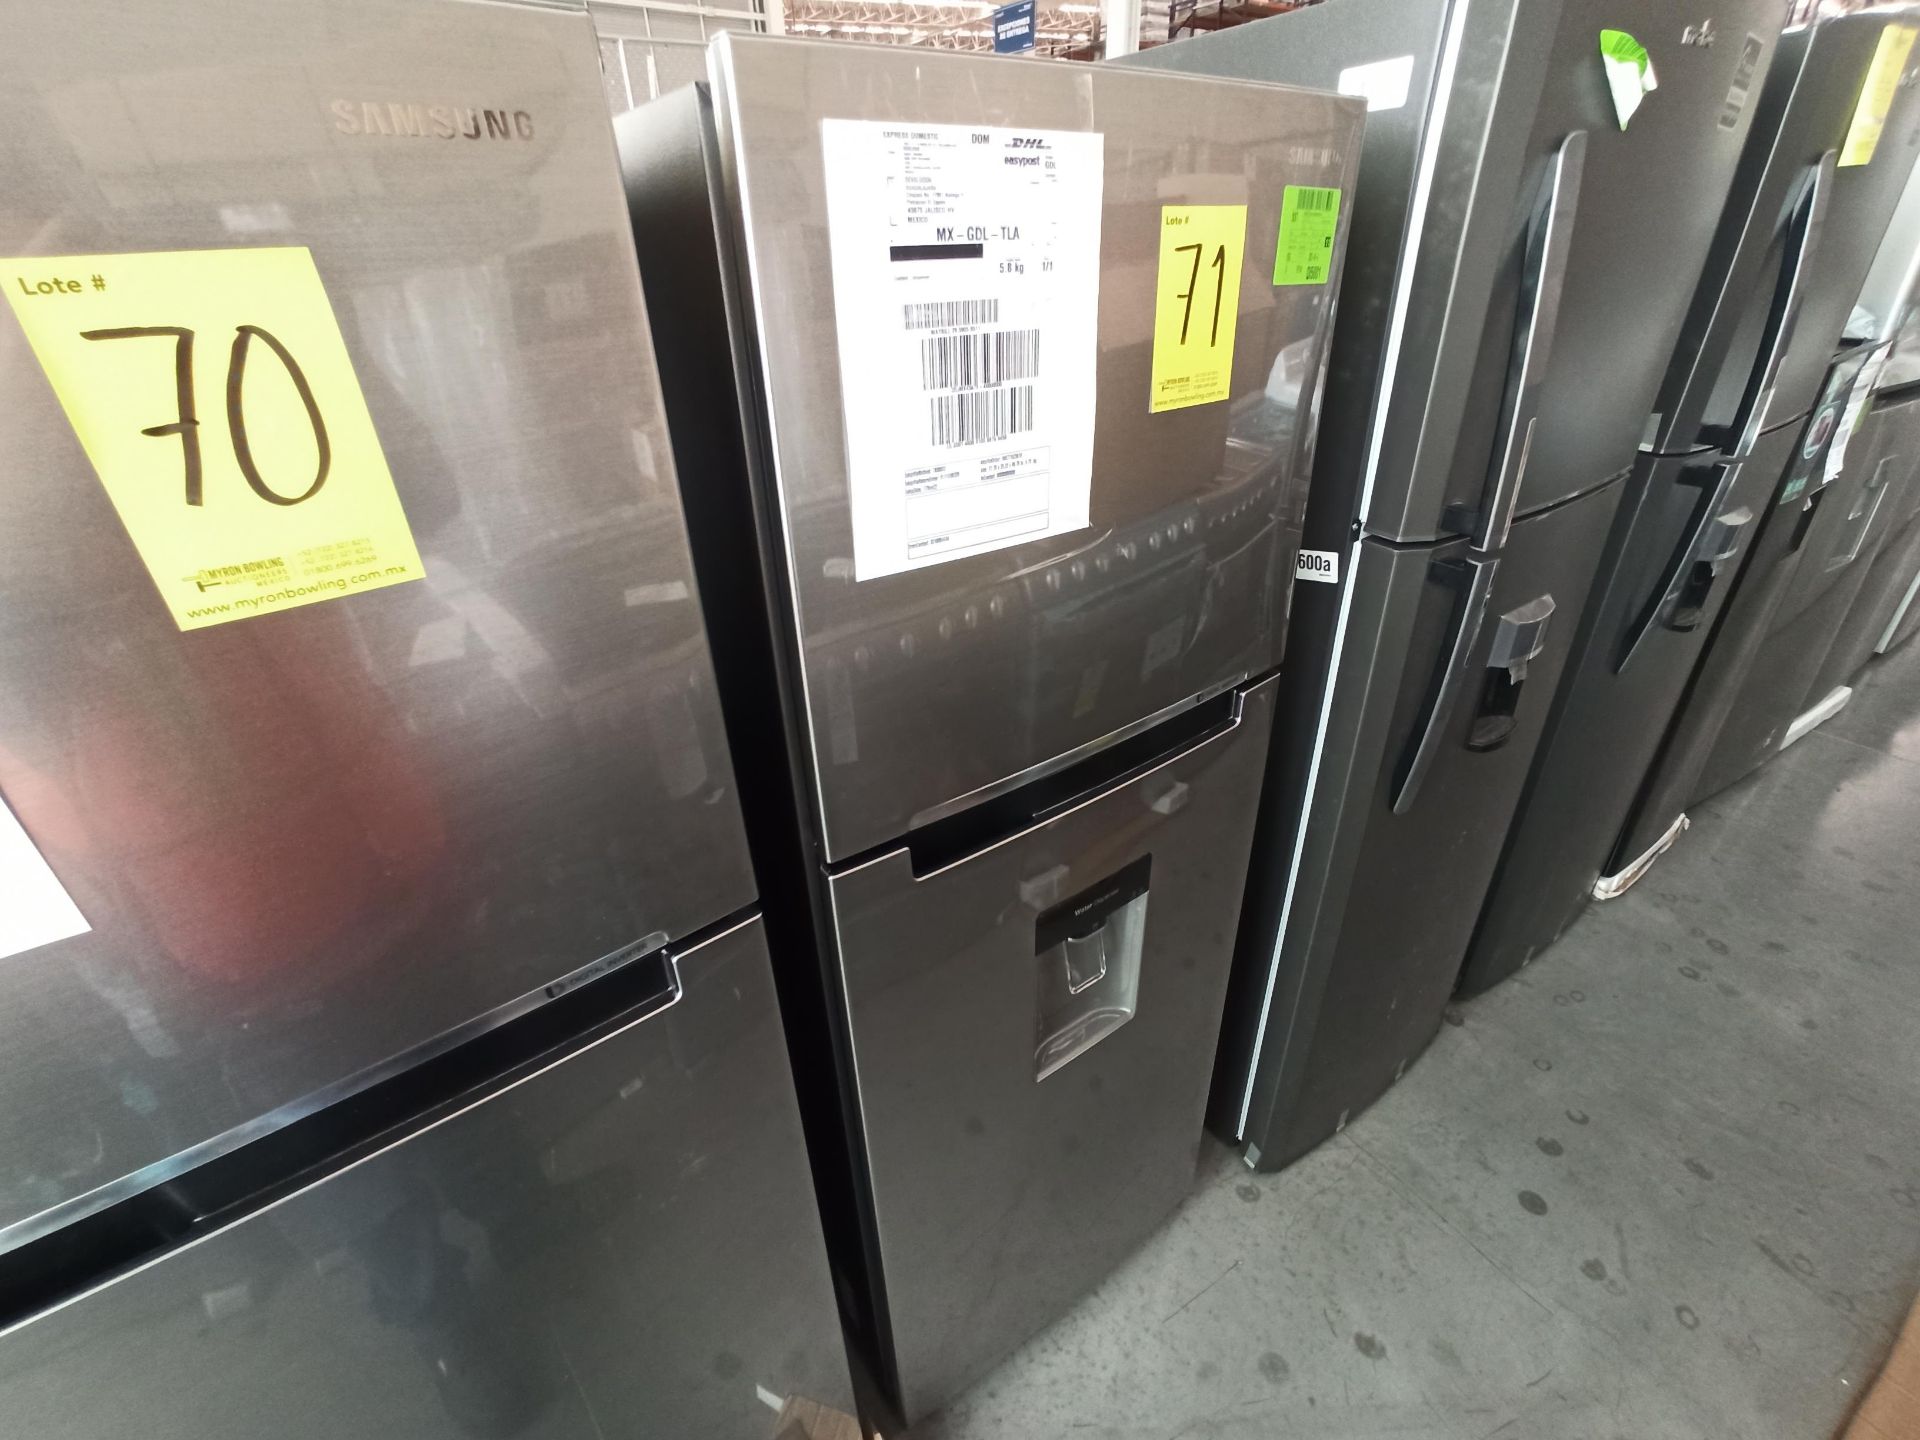 1 Refrigerador con dispensador de agua Marca SAMSUNG, Modelo RT29A5710S8, Serie 00556A, Color GRIS, - Image 6 of 9